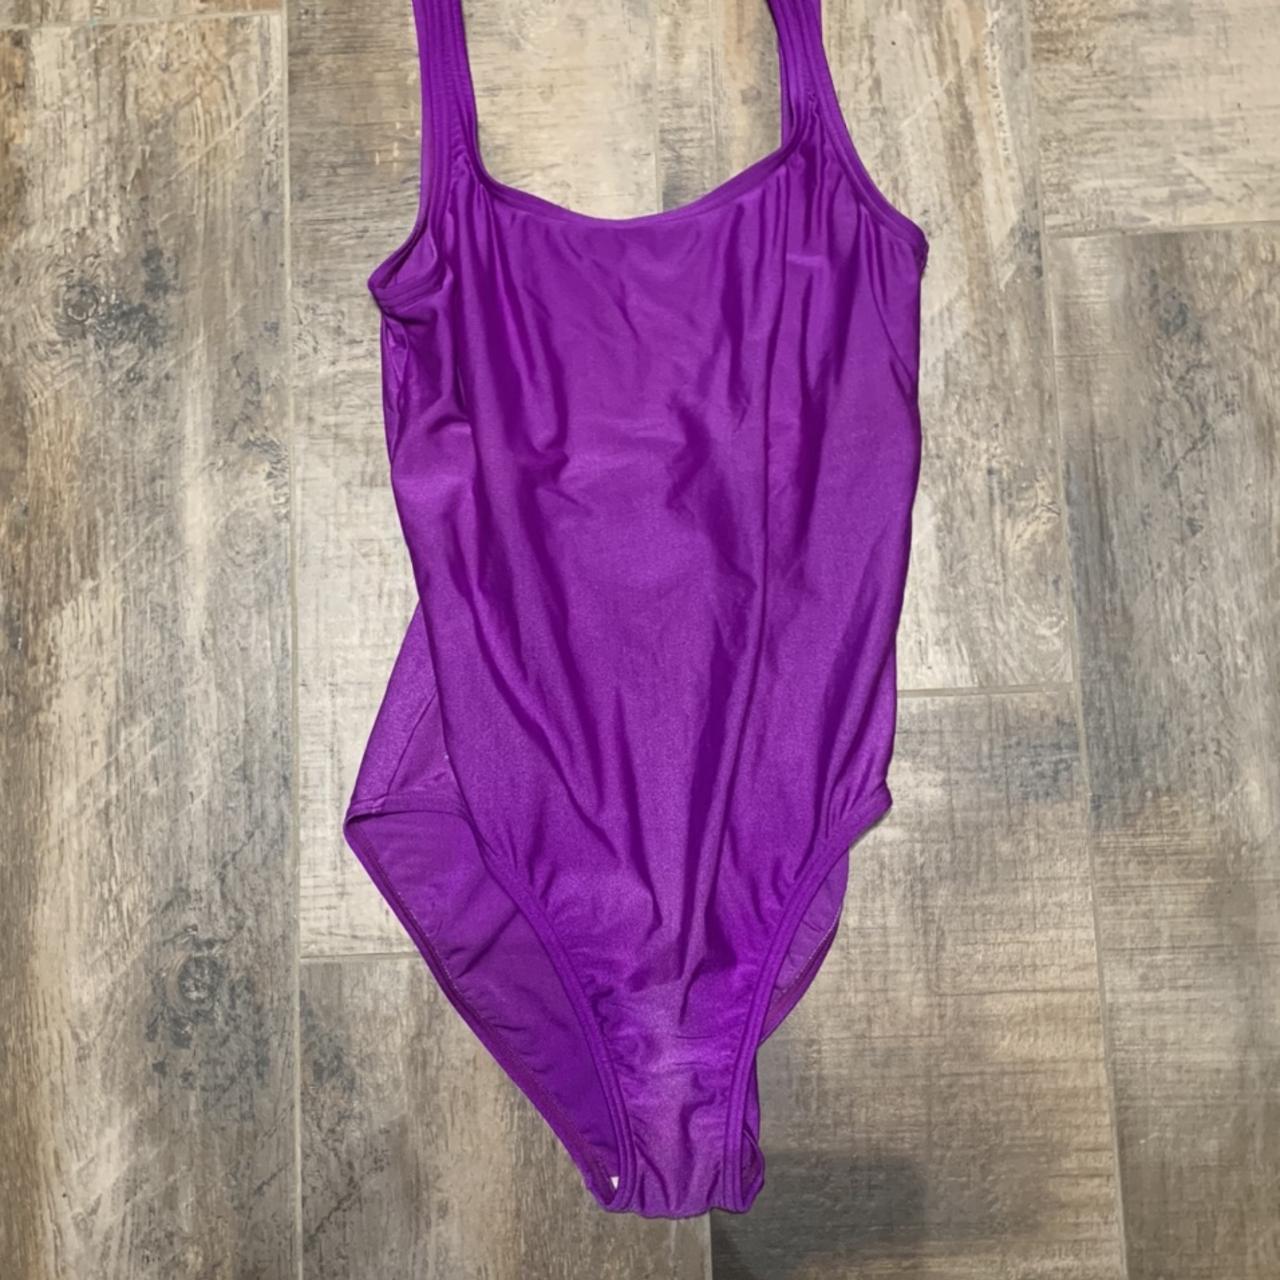 Speedo purple one piece swimming suit No size... - Depop